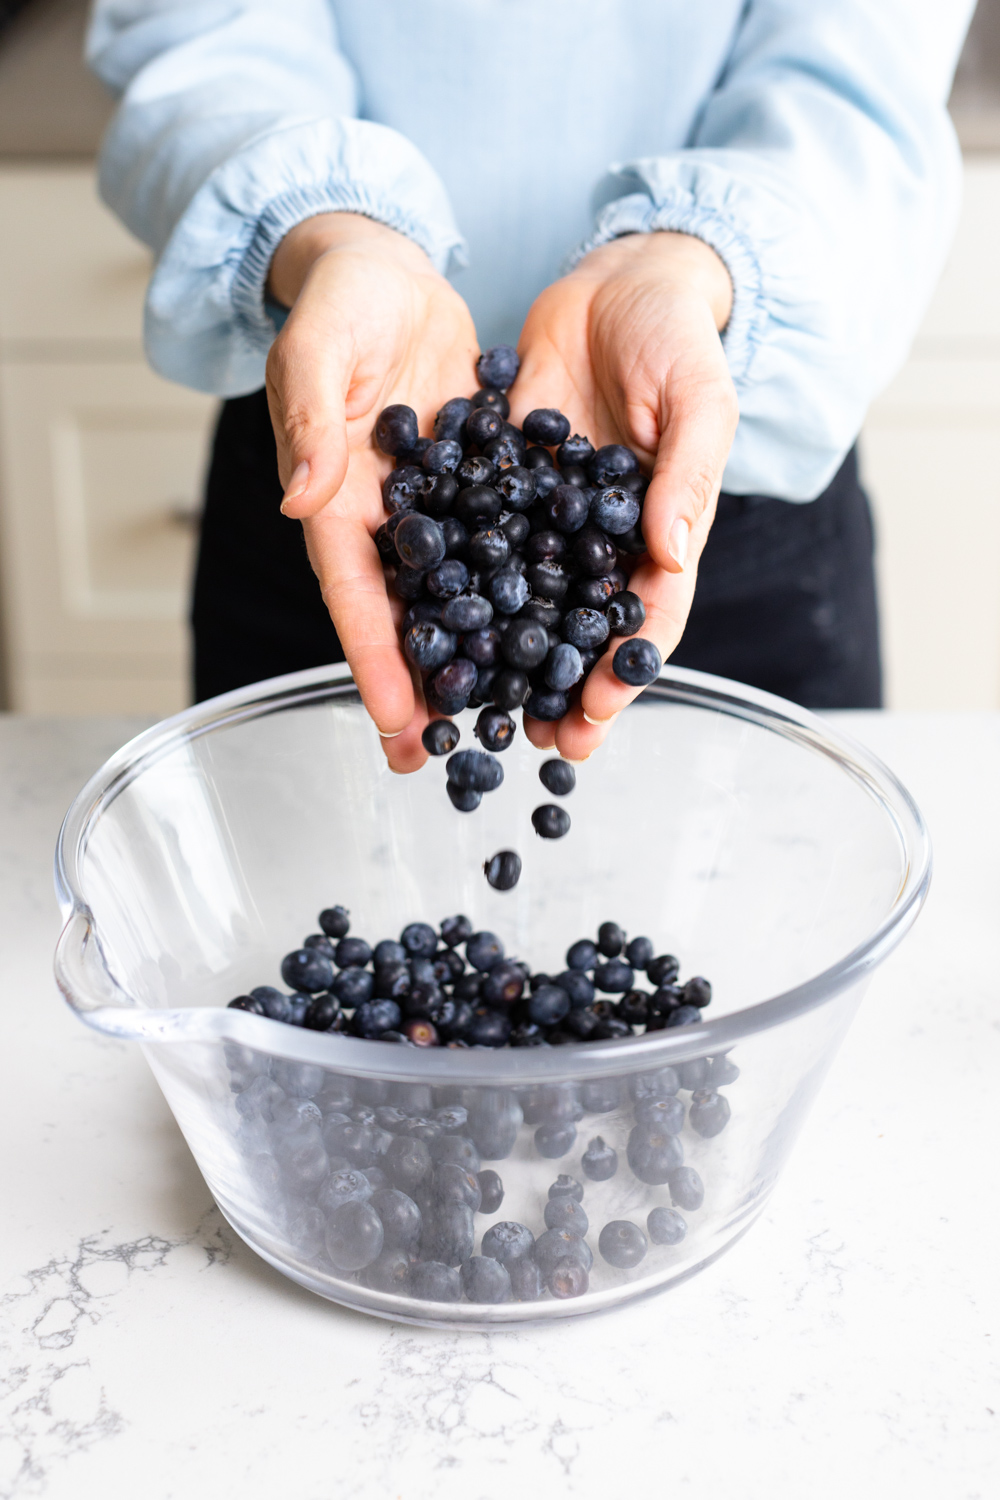 California Grown blueberries